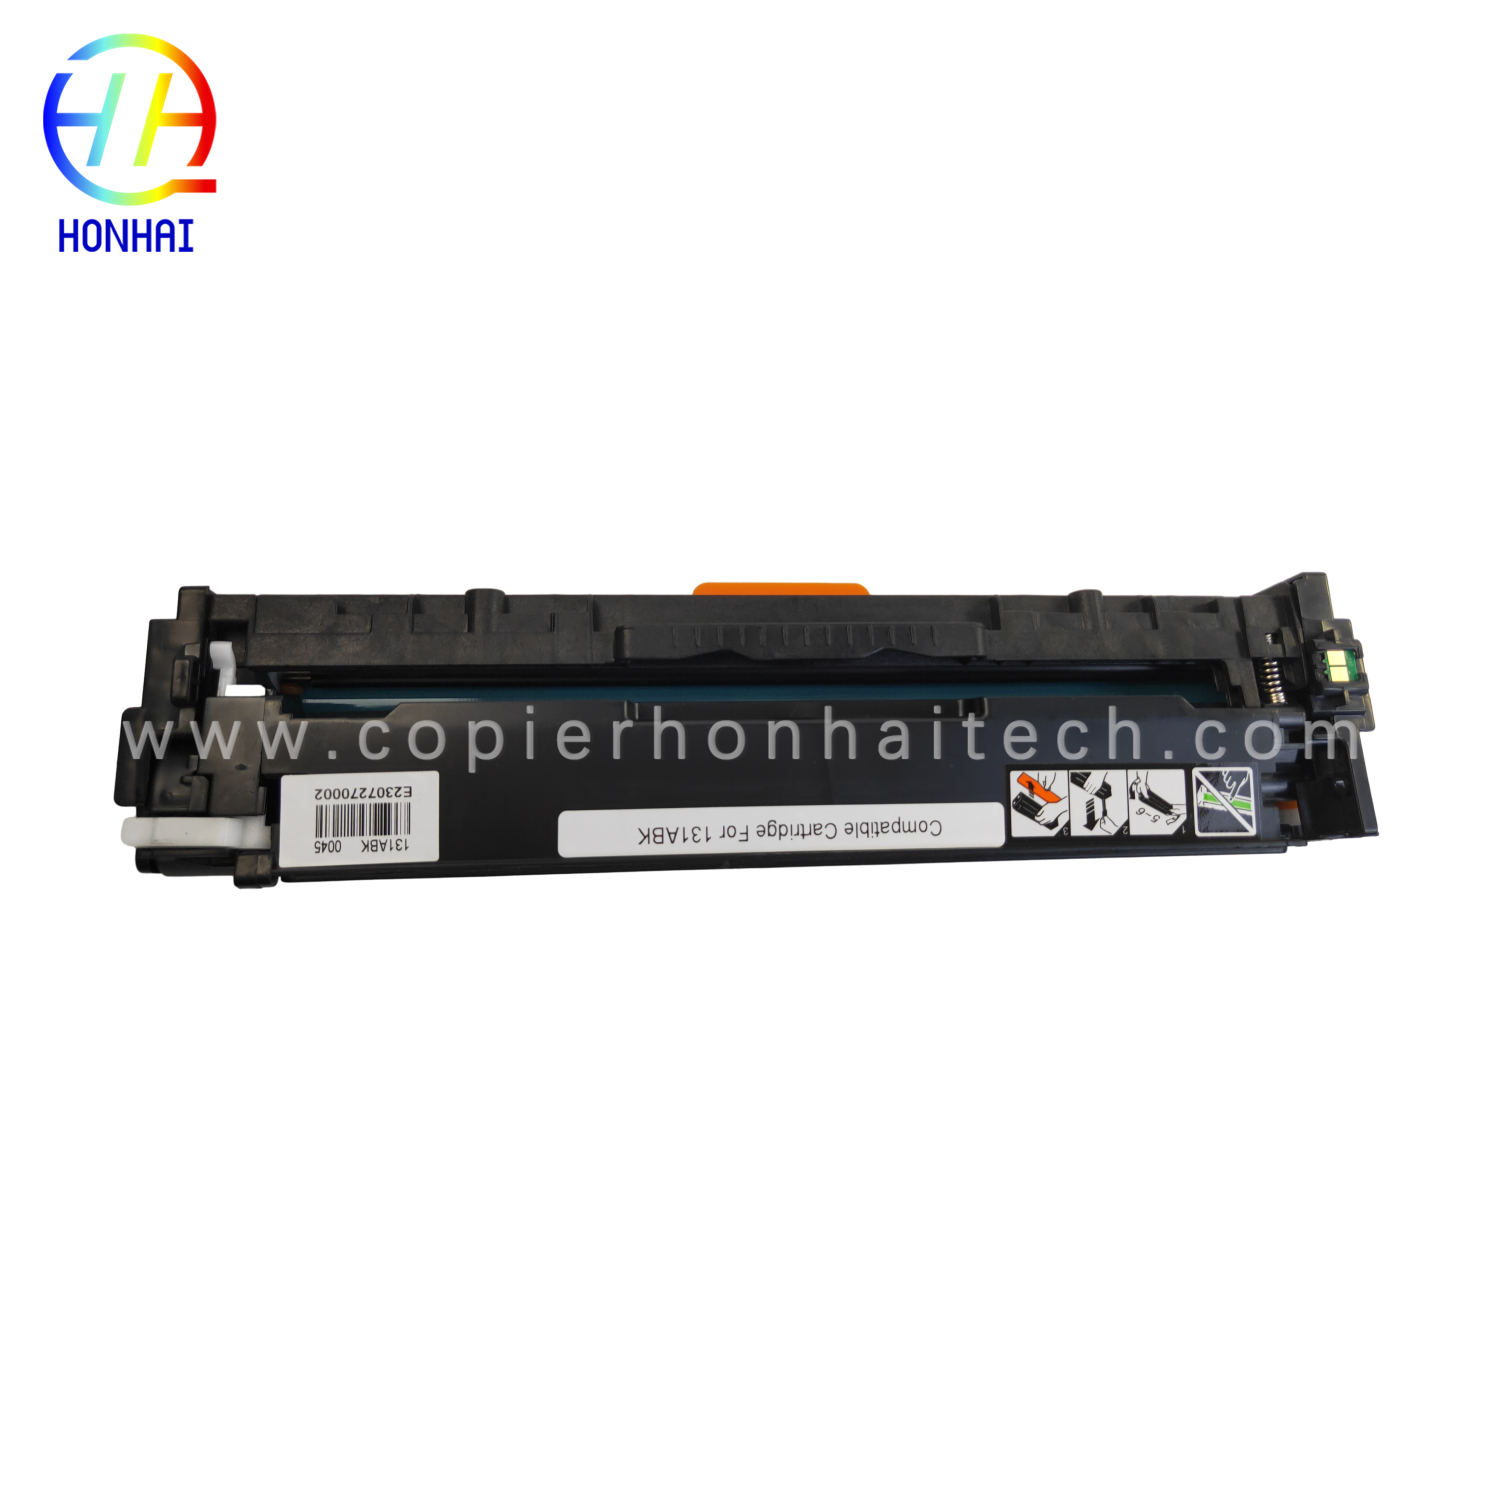 https://www.copierhonhaitech.com/toner-cartridge-for-hp-laserjet-pro-200- رەڭگى- 251nw